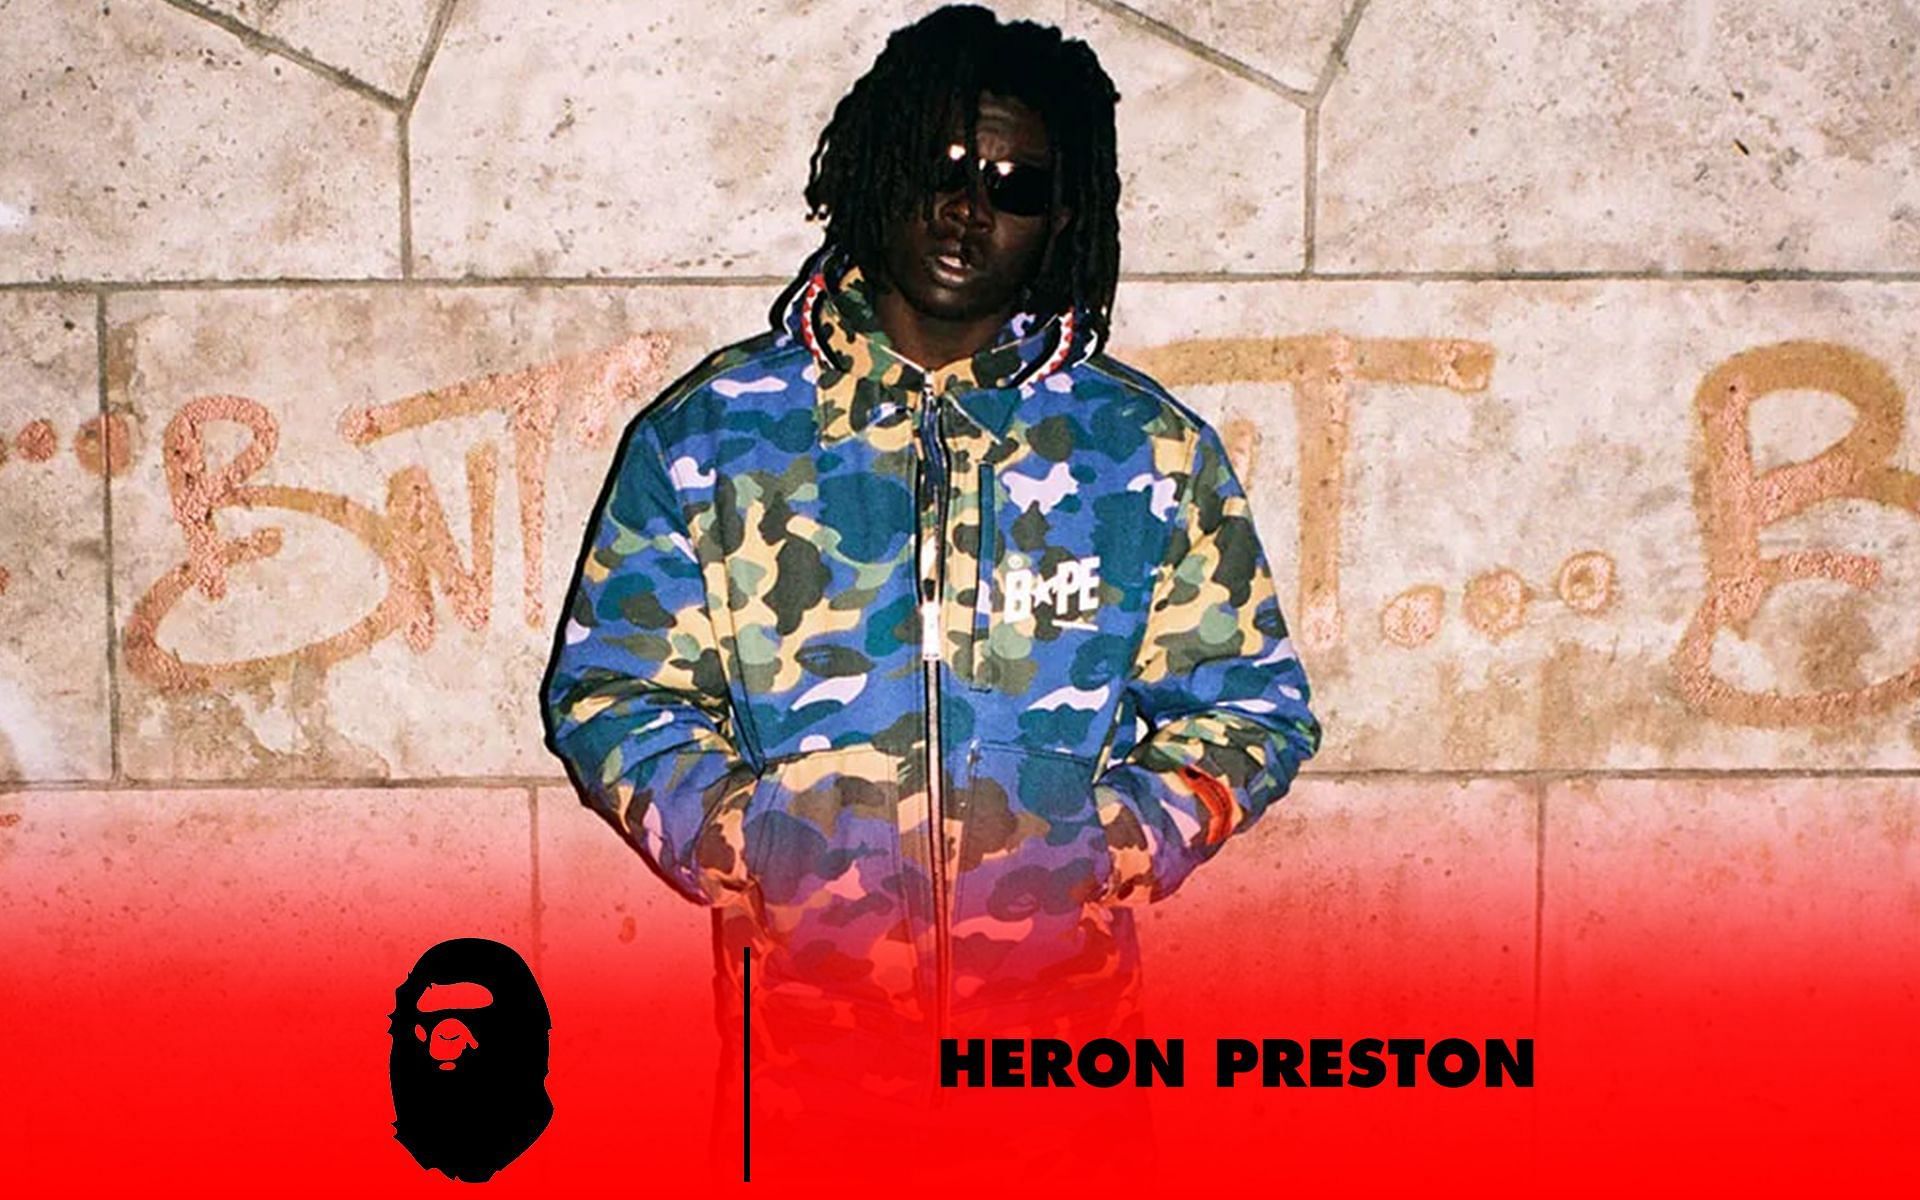 Heron Preston x Bape collab (Image via Bape)